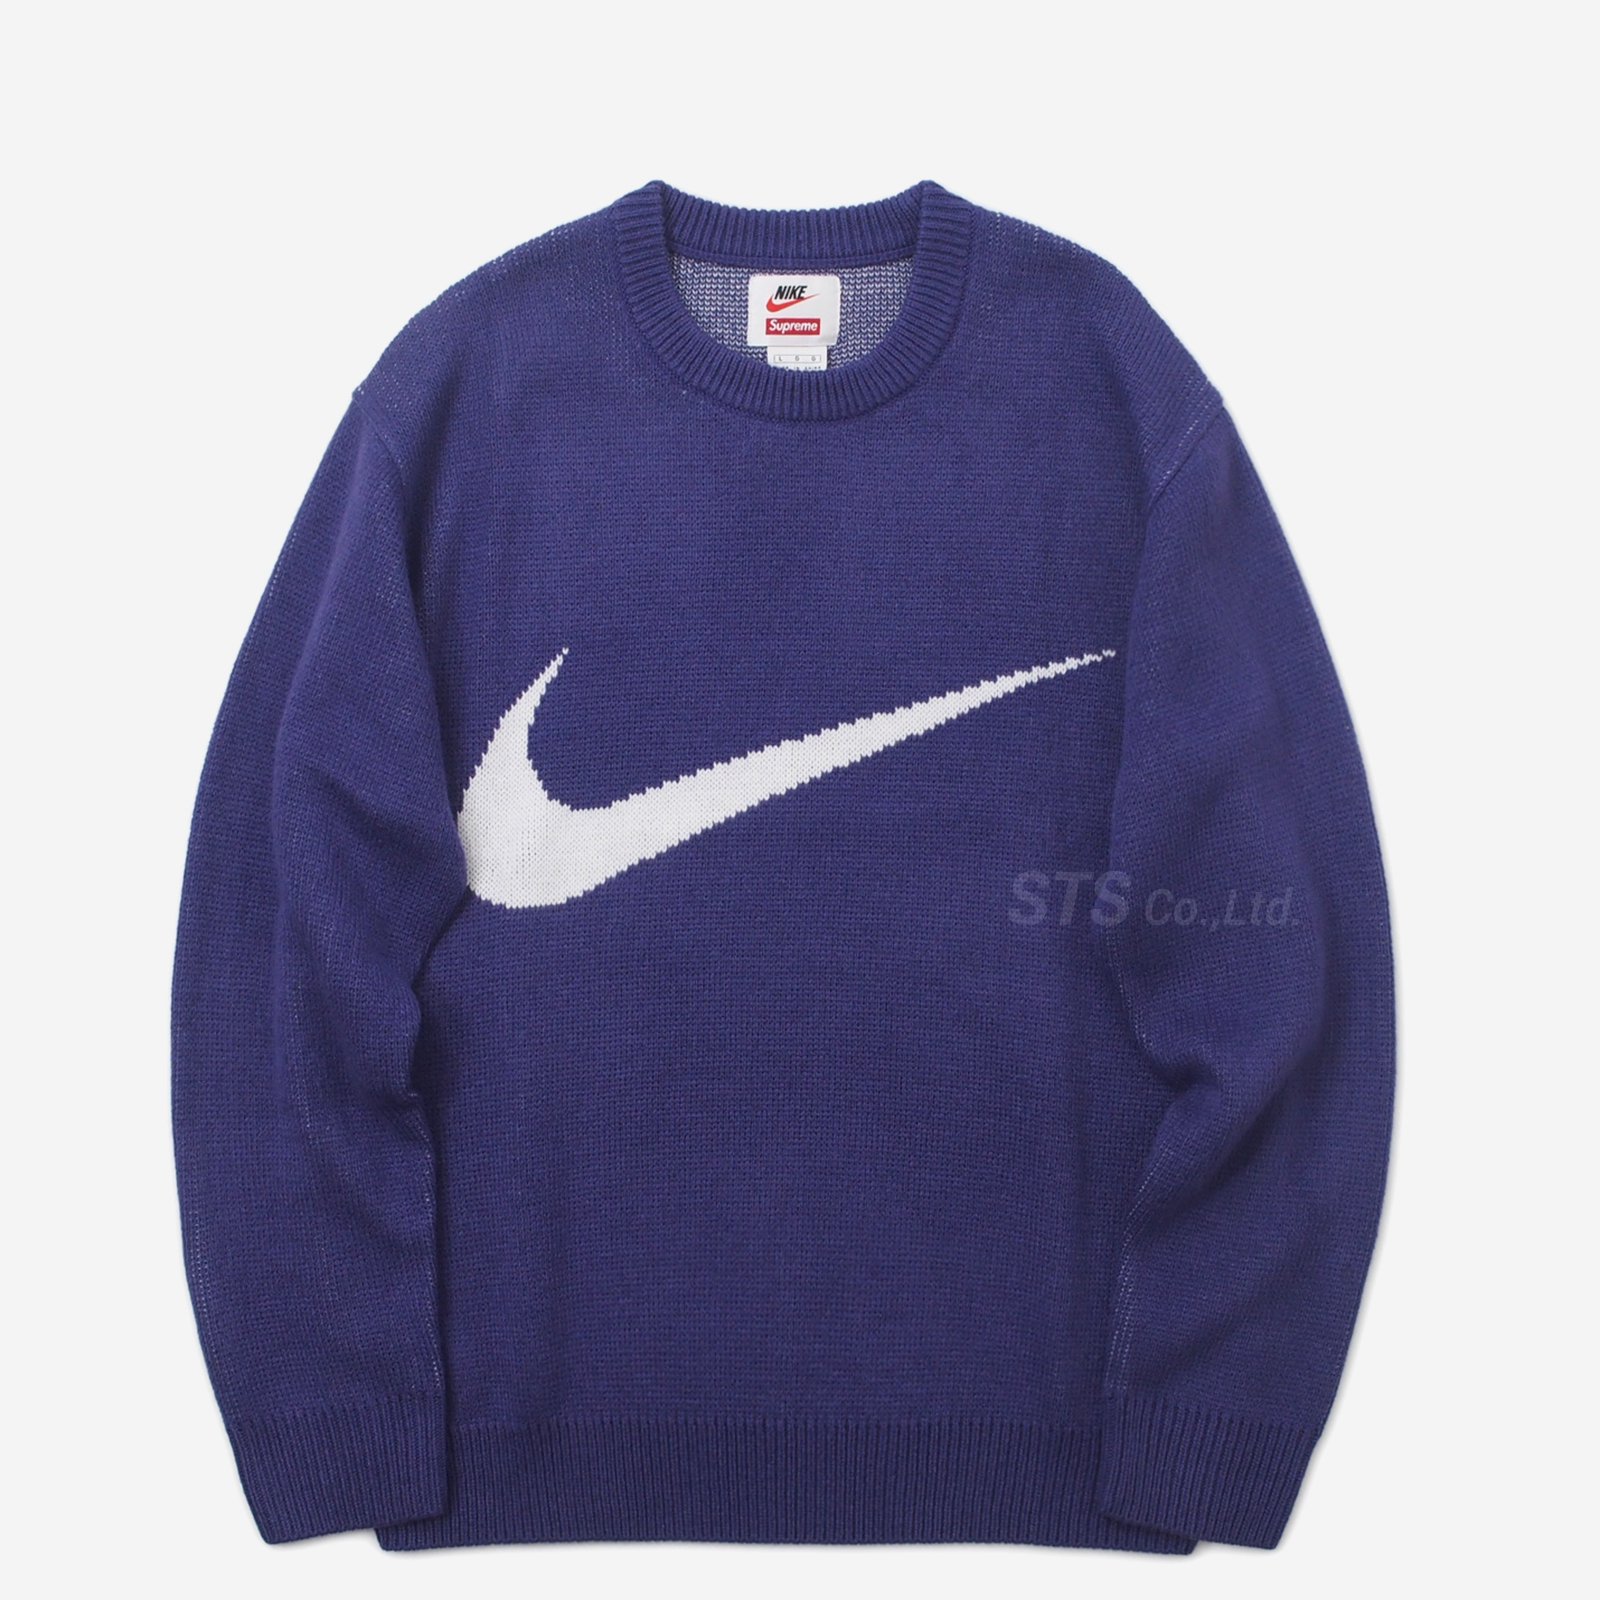 Supreme/Nike Swoosh Sweater - ParkSIDER